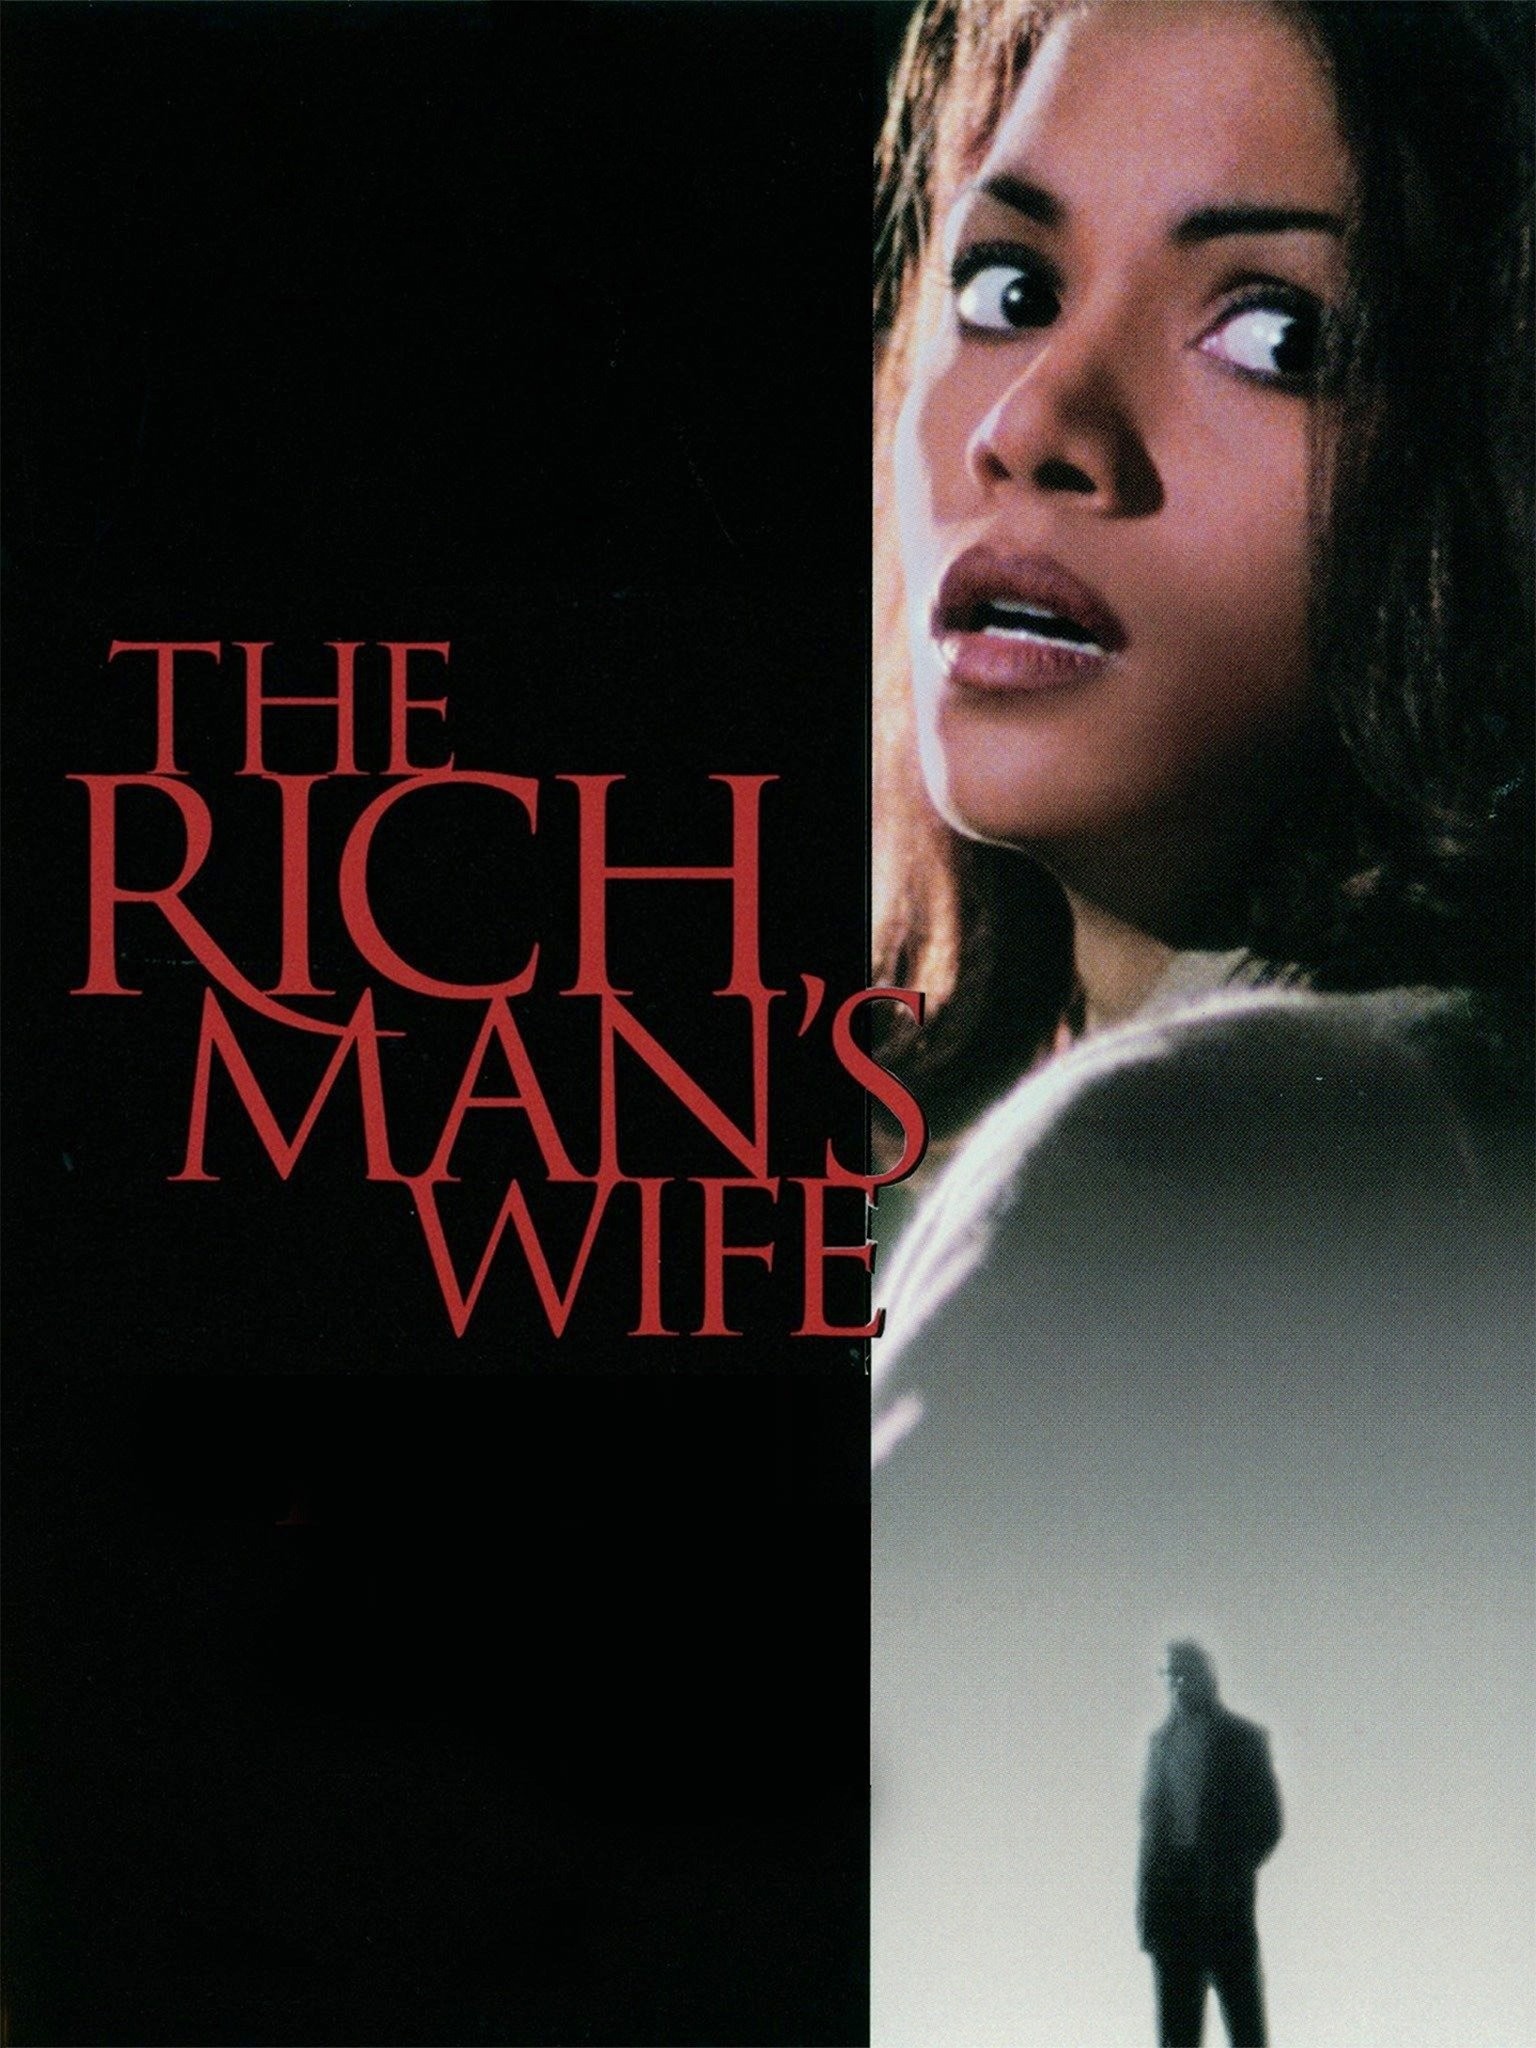 The rich man's wife 1996 sex scene